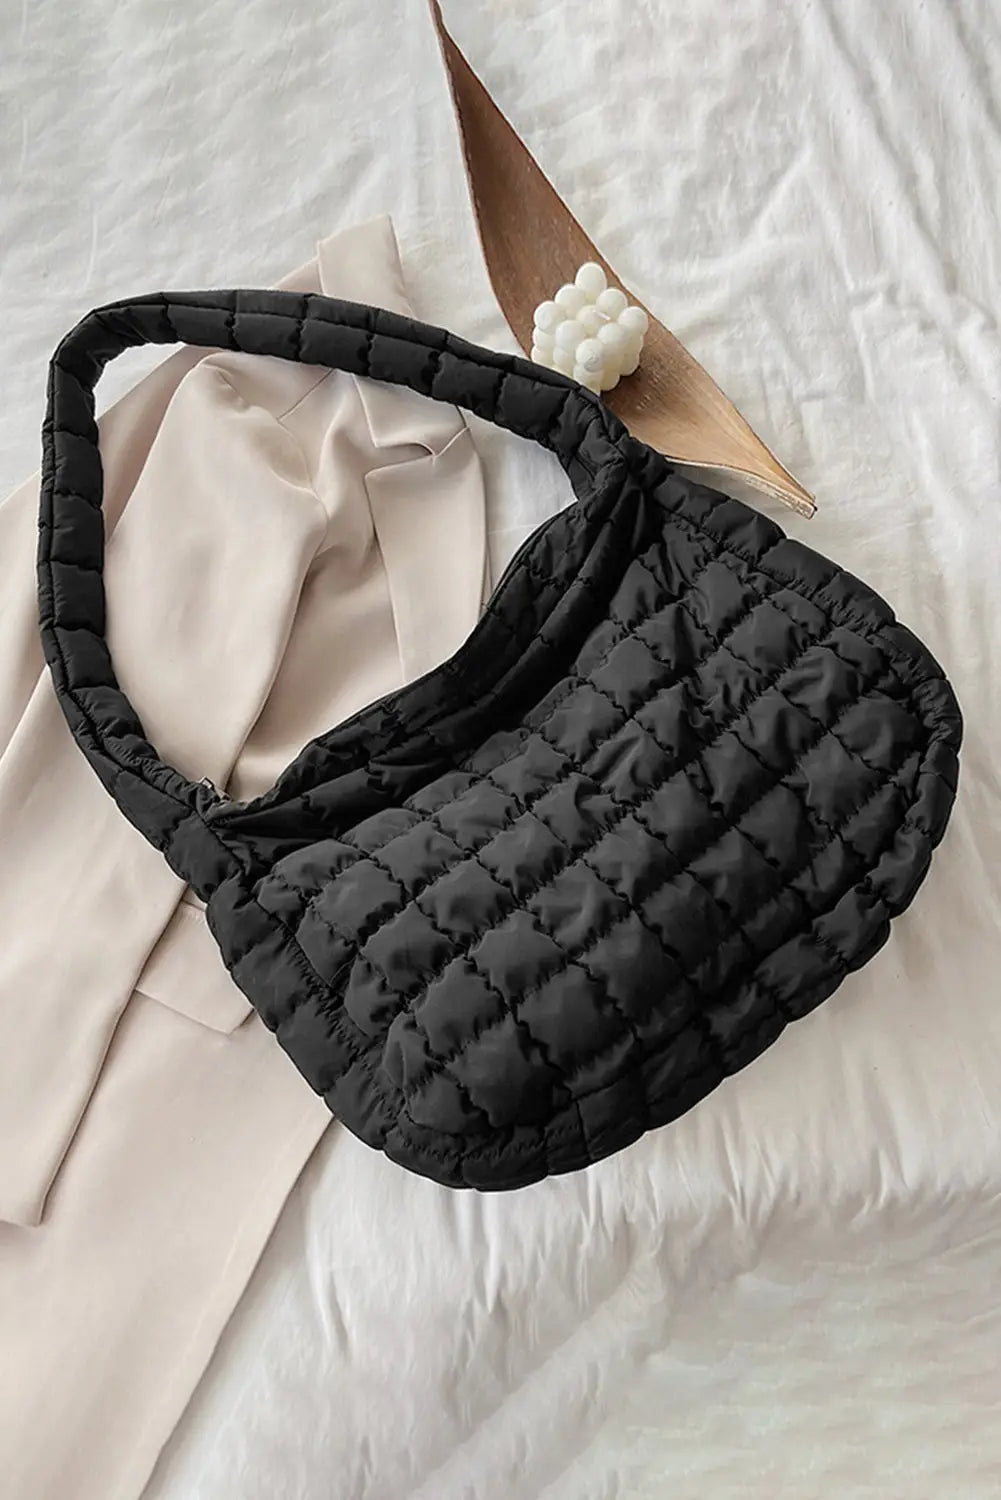 Black quilted zipper large shoulder bag - shoes & bags